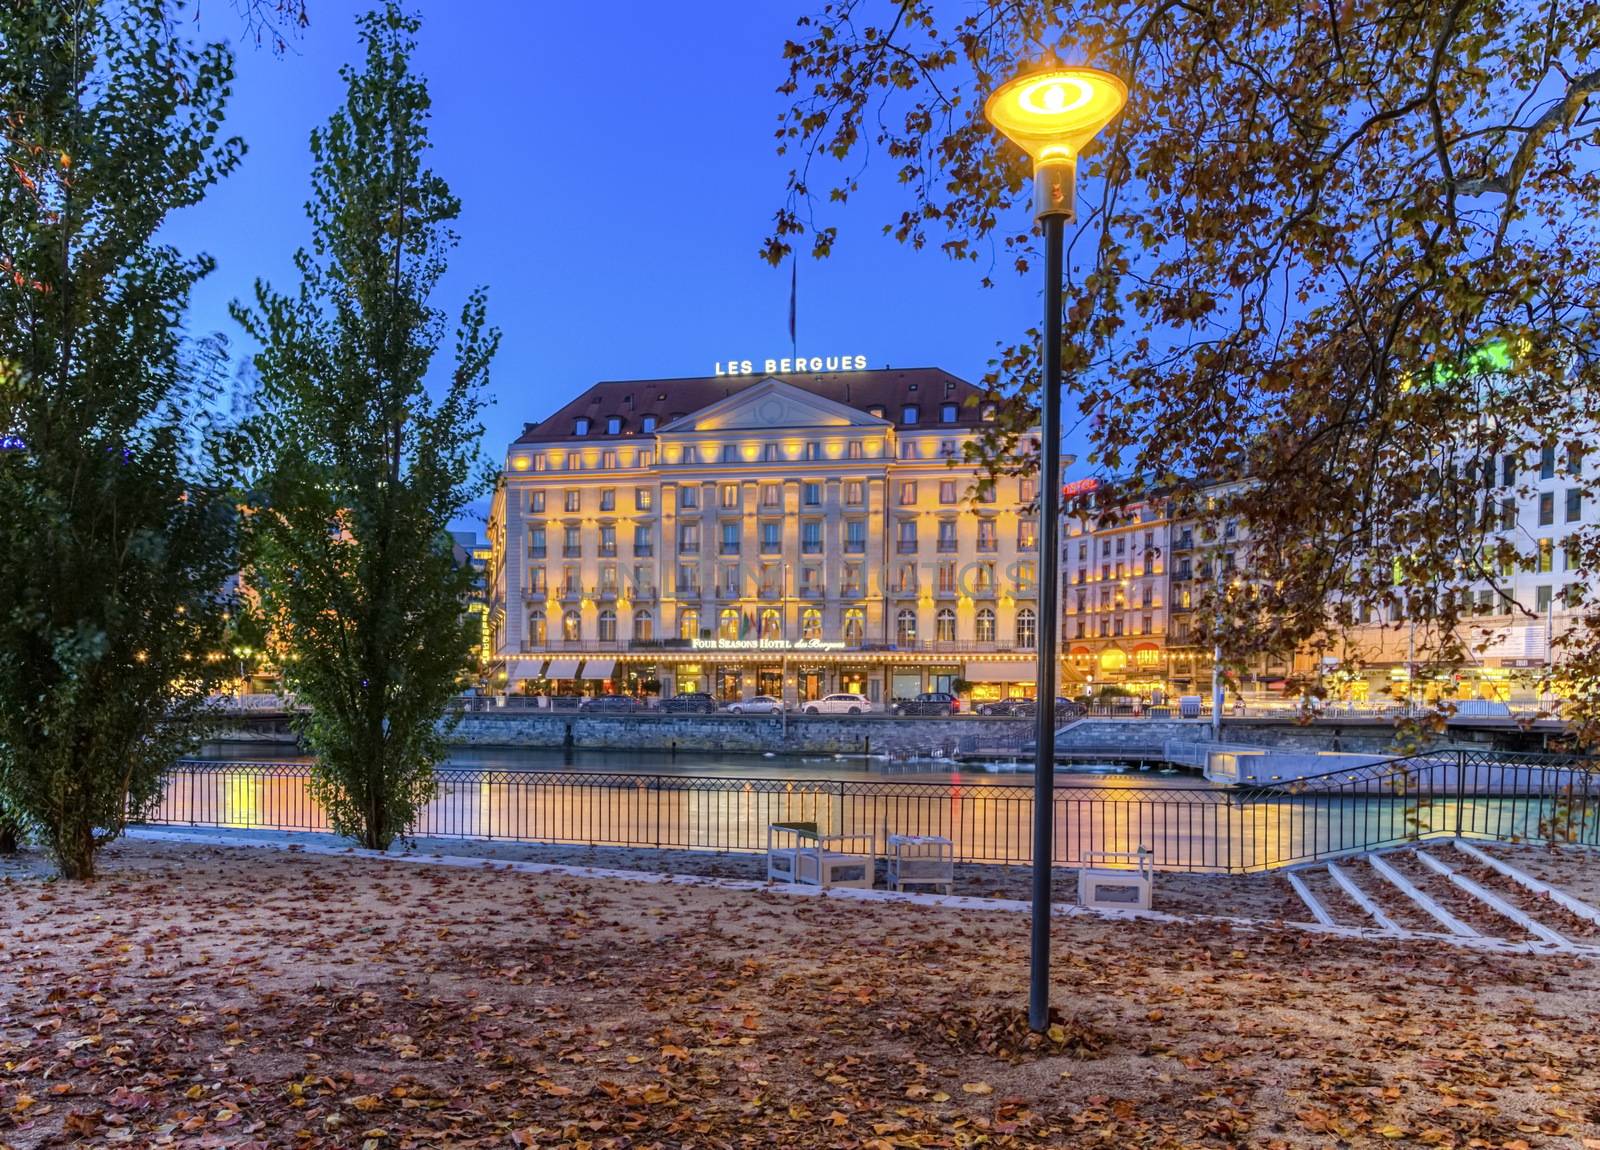 GENEVA, SWITZERLAND - November 13, 2014 : Bergues Hotel and riverside from Rousseau island, Geneva, Switzerland, HDR